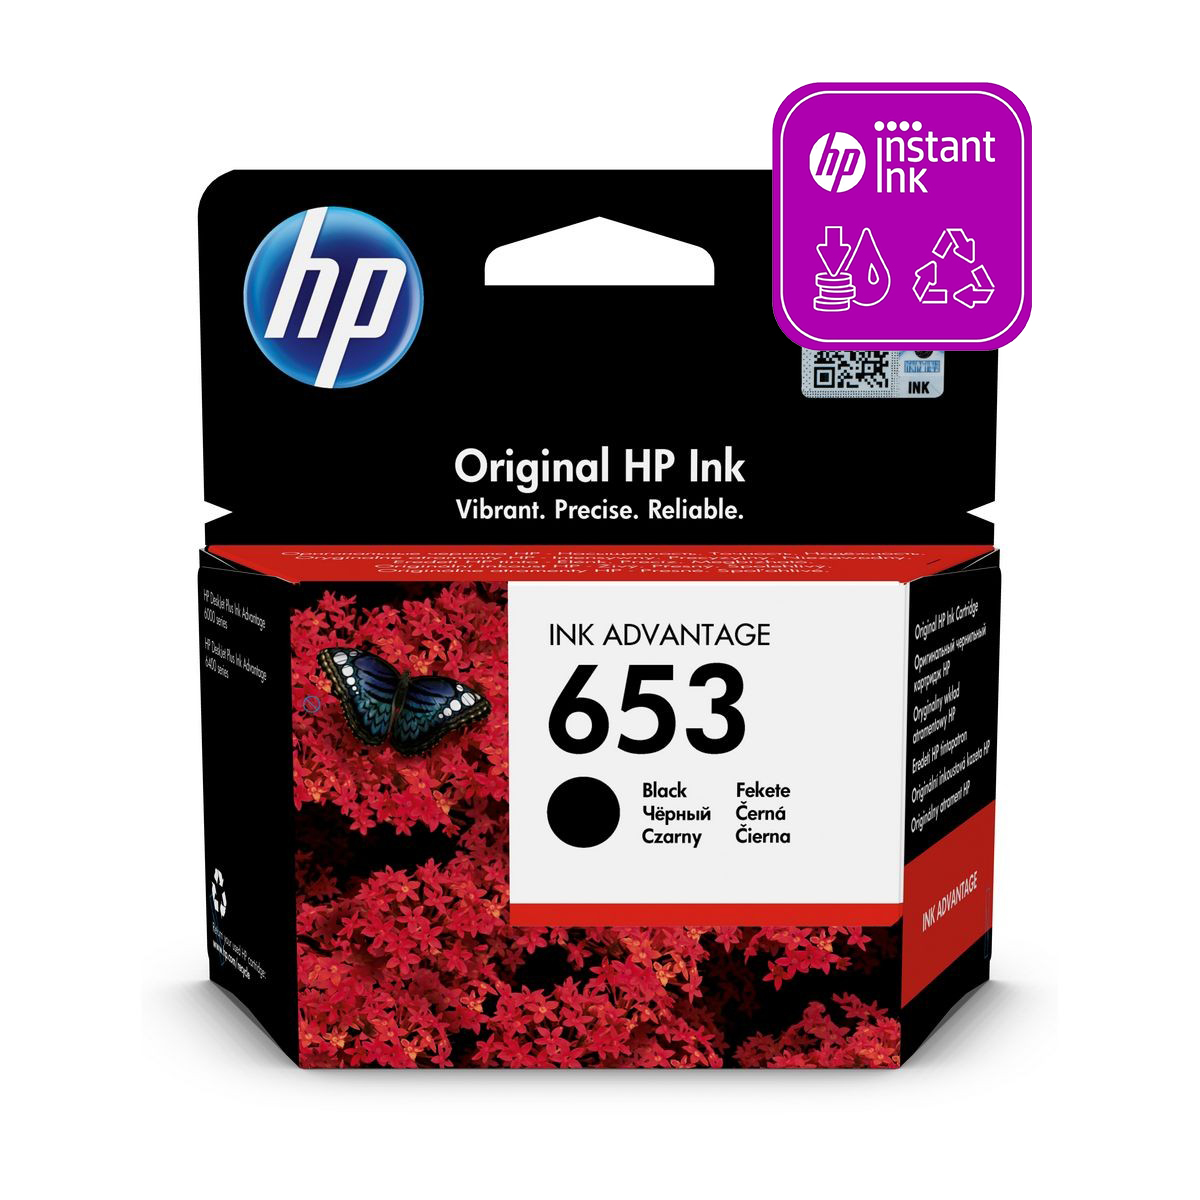 HP ORIGINAL INK 3YM75AE, BLACK, 360 STR., HP 653 posledný kus